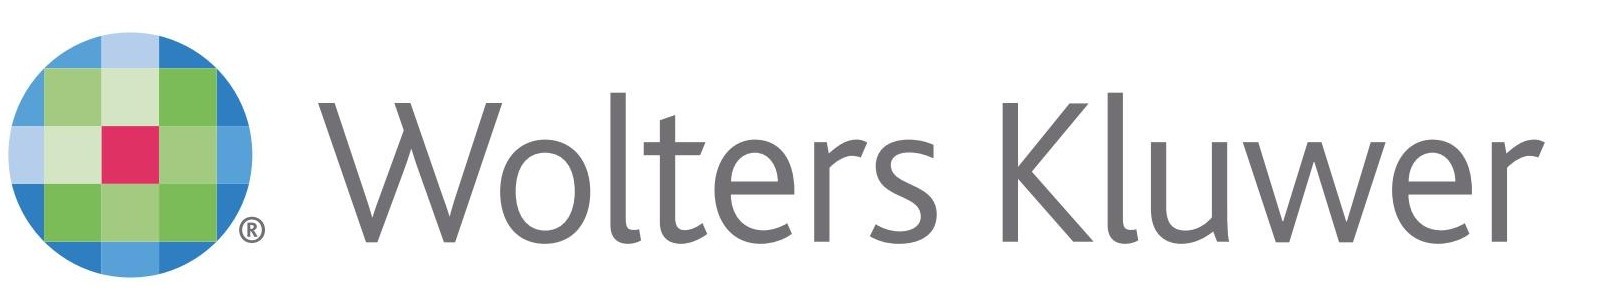 Wolters Kluwer logo e1421098525337 1  5727efc412274